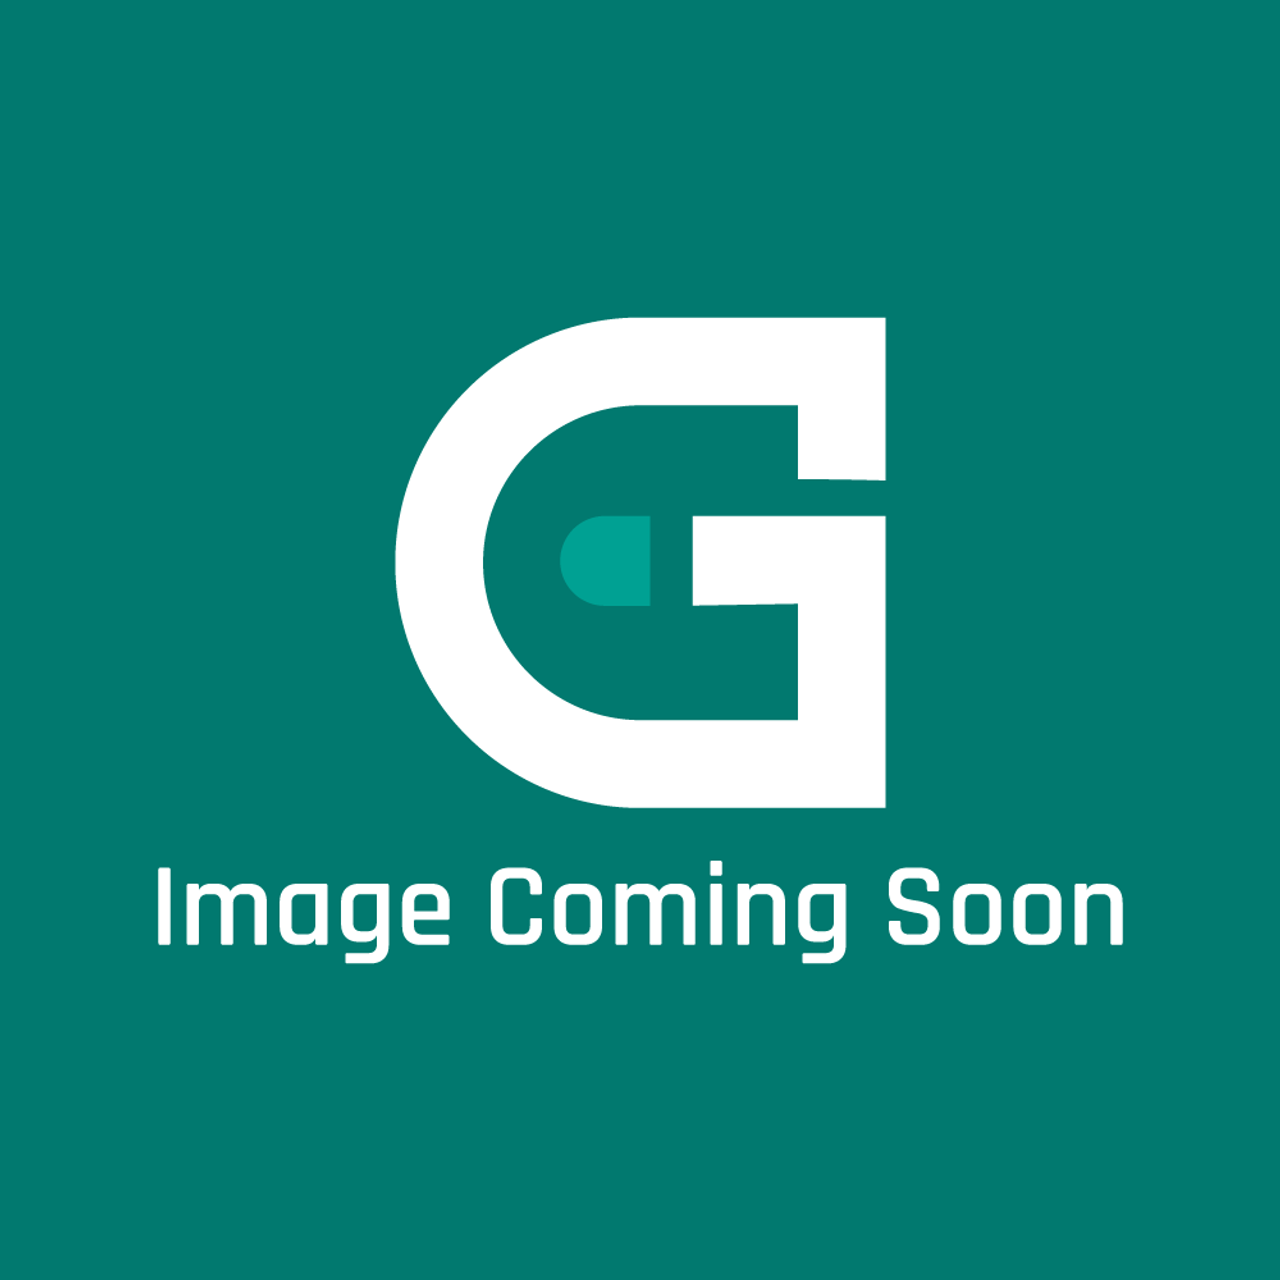 GE Appliances WB26X10229 - 3 - Speed Motor Asm - Image Coming Soon!